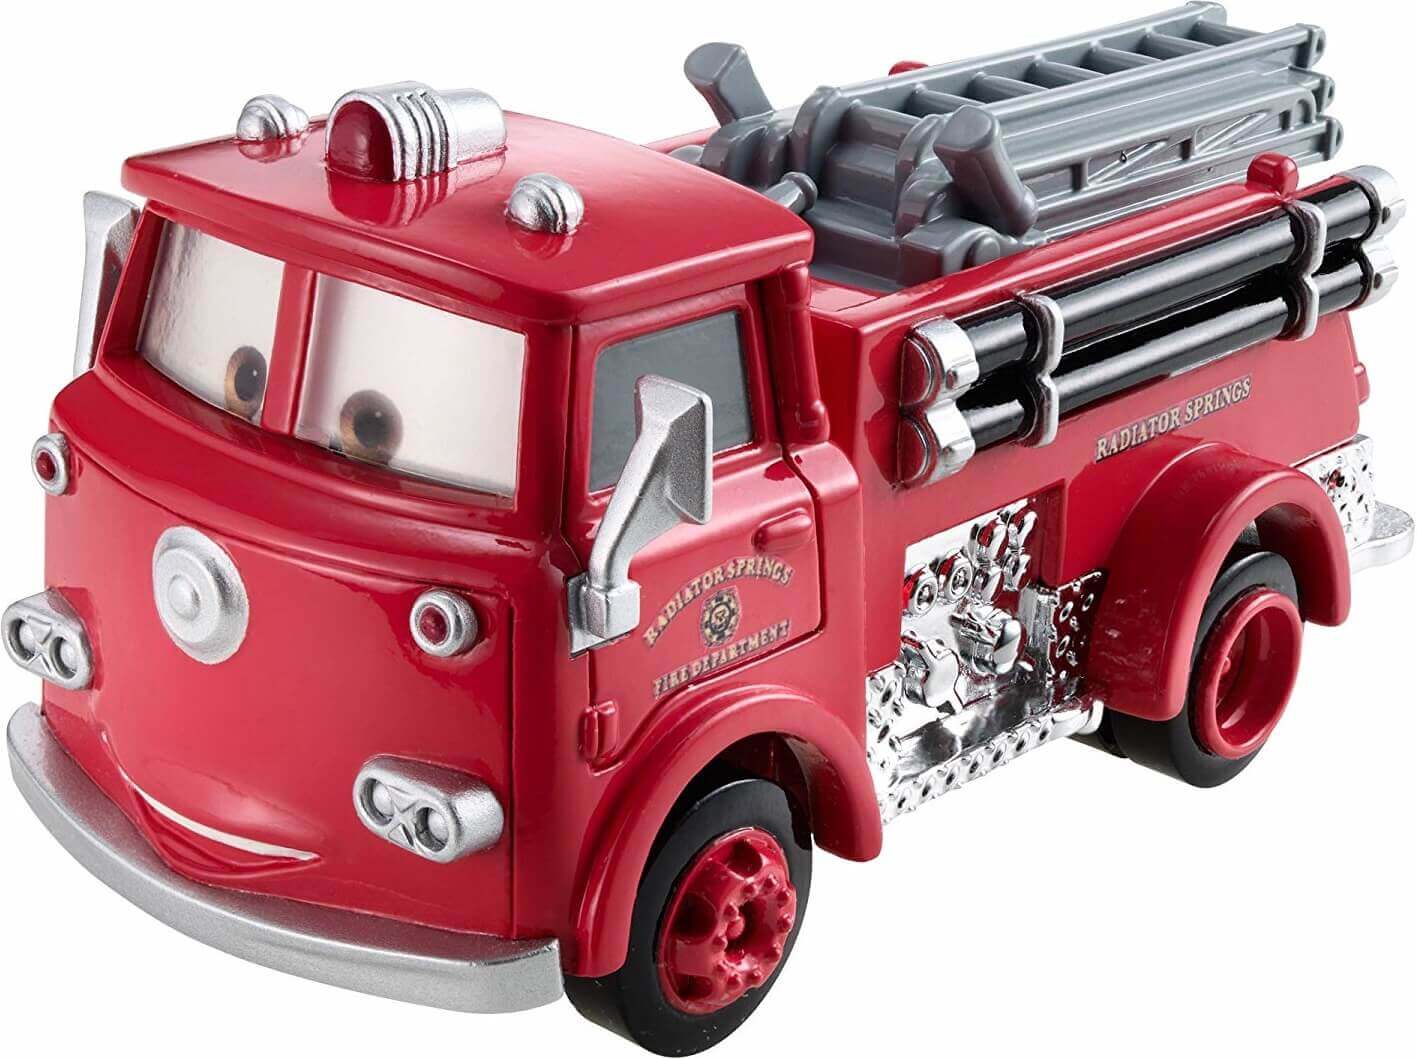 Cars: Radiator Springs Red ( Mattel BDW67 ) imagen a